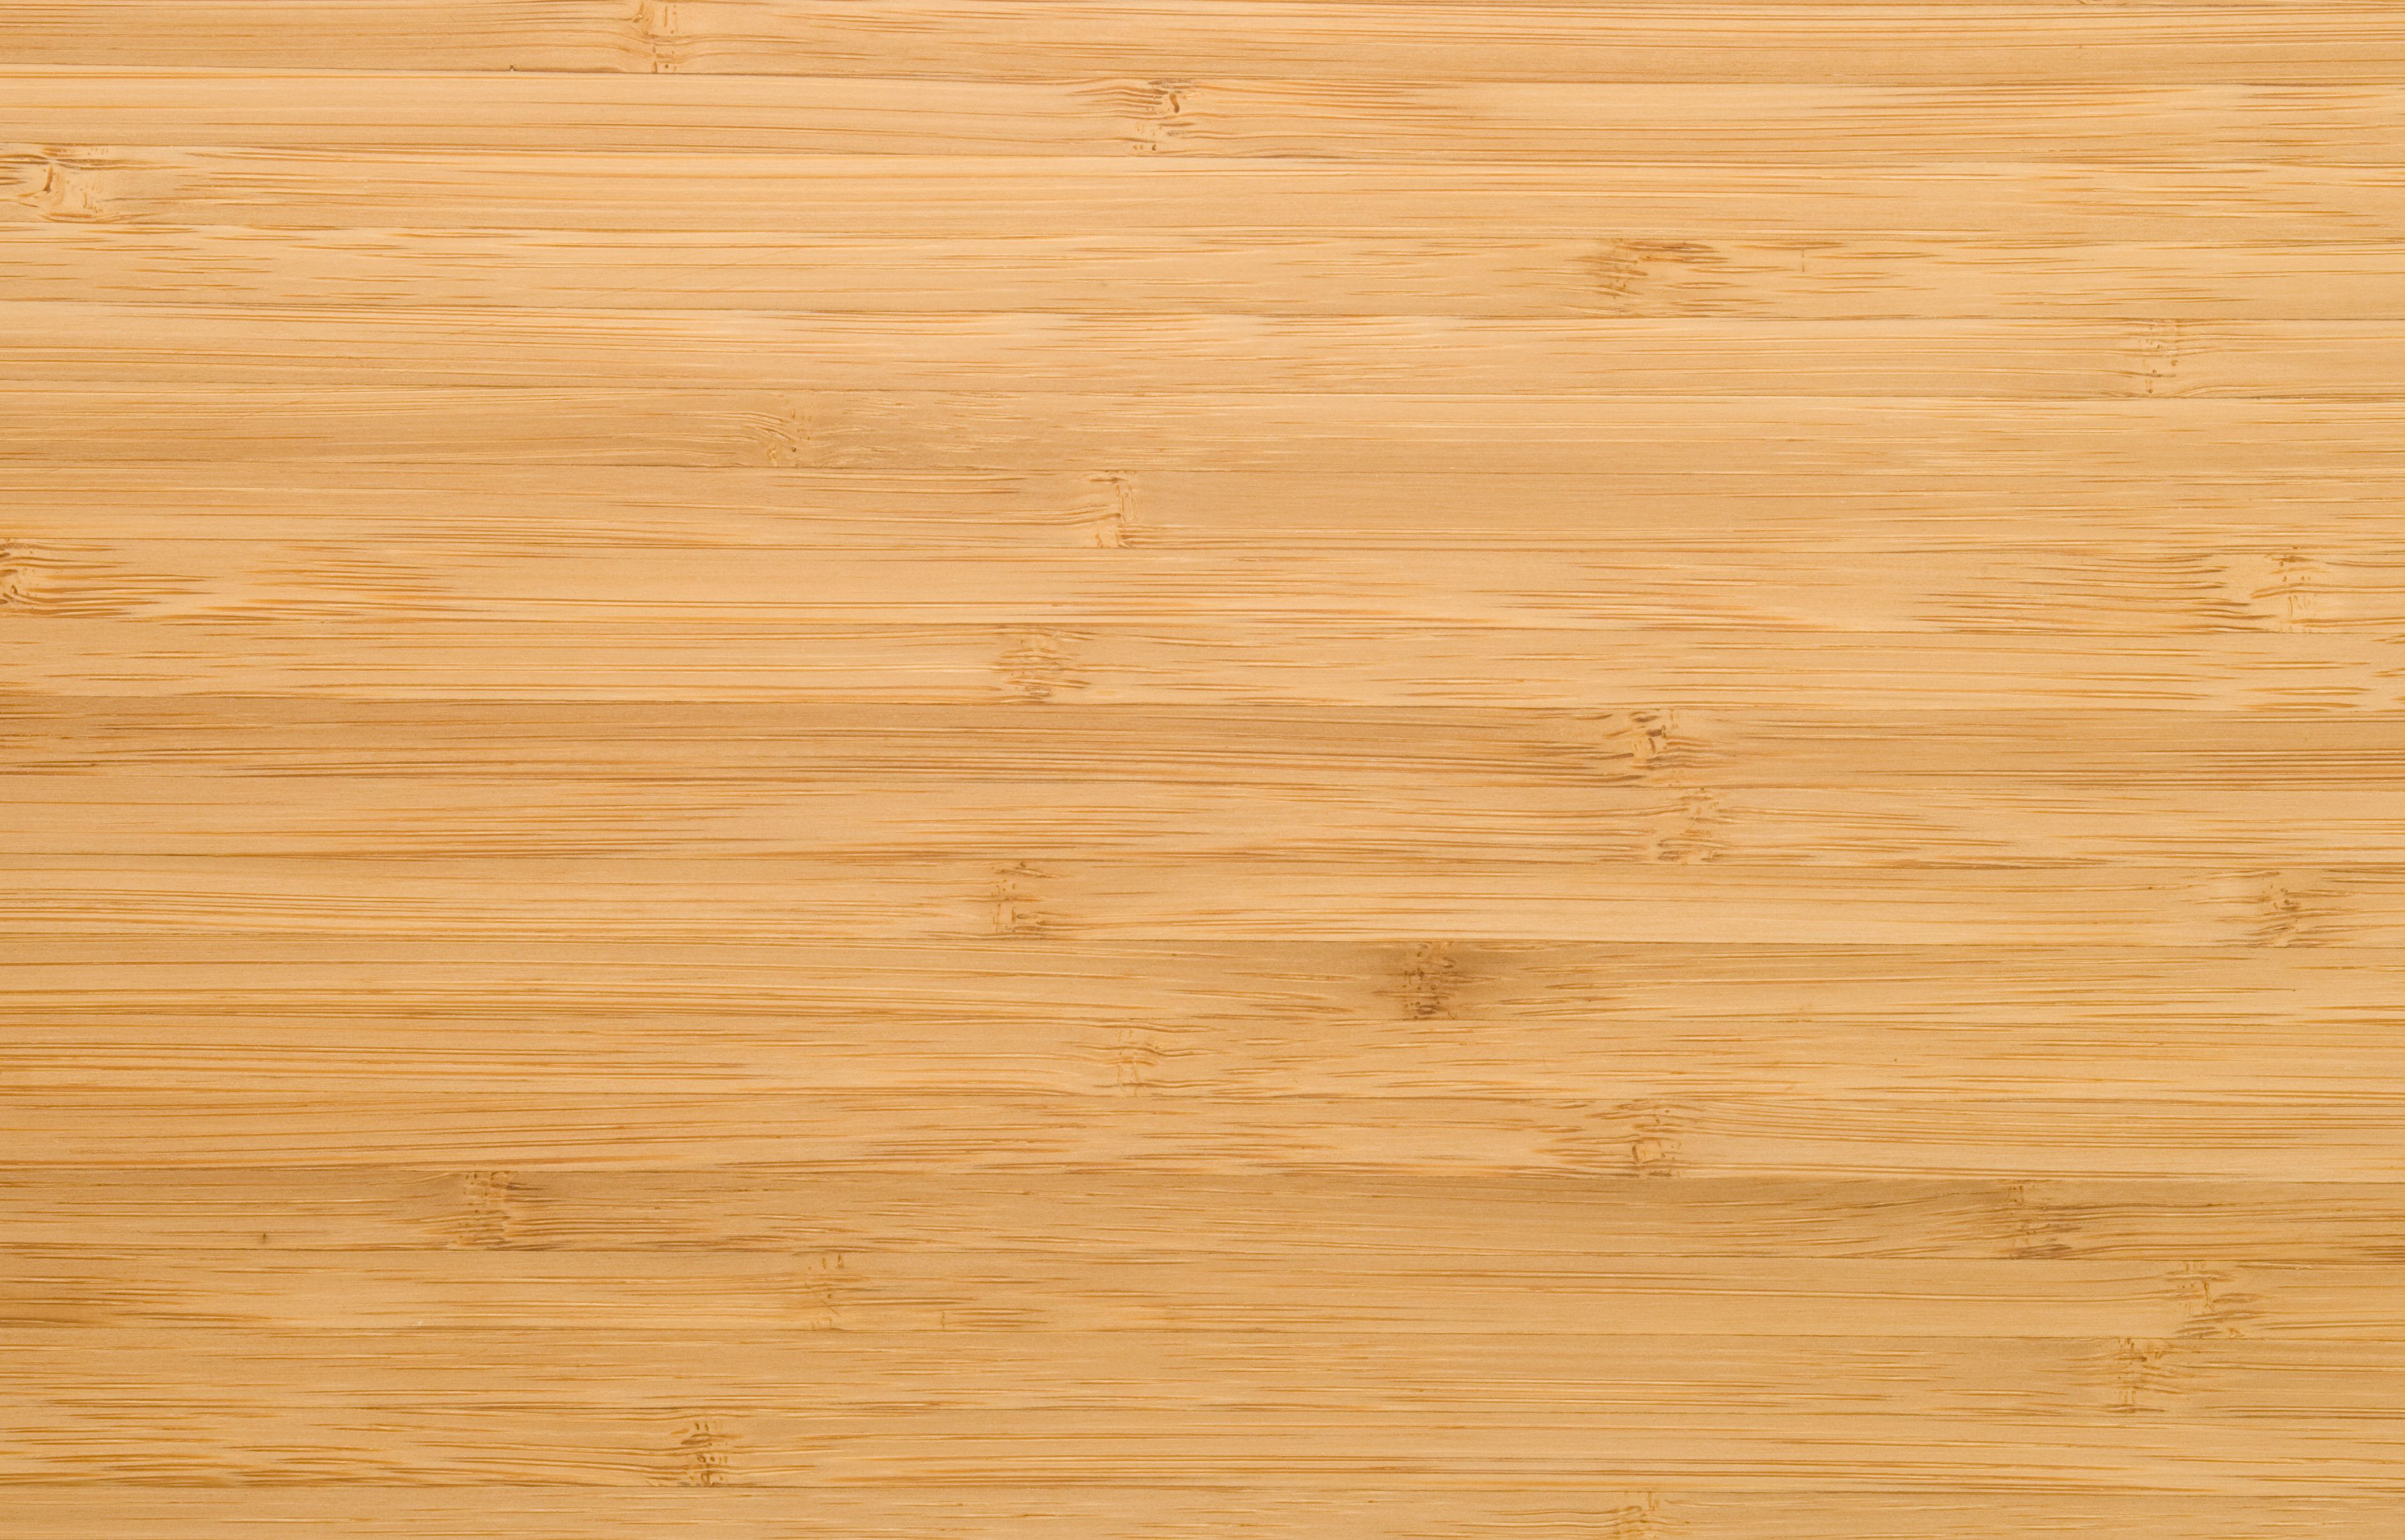 13 attractive Hardwood Floor Gouge Repair 2024 free download hardwood floor gouge repair of can you use a wet mop on bamboo floors for natural bamboo plank 94259870 59aeefd4519de20010d5c648